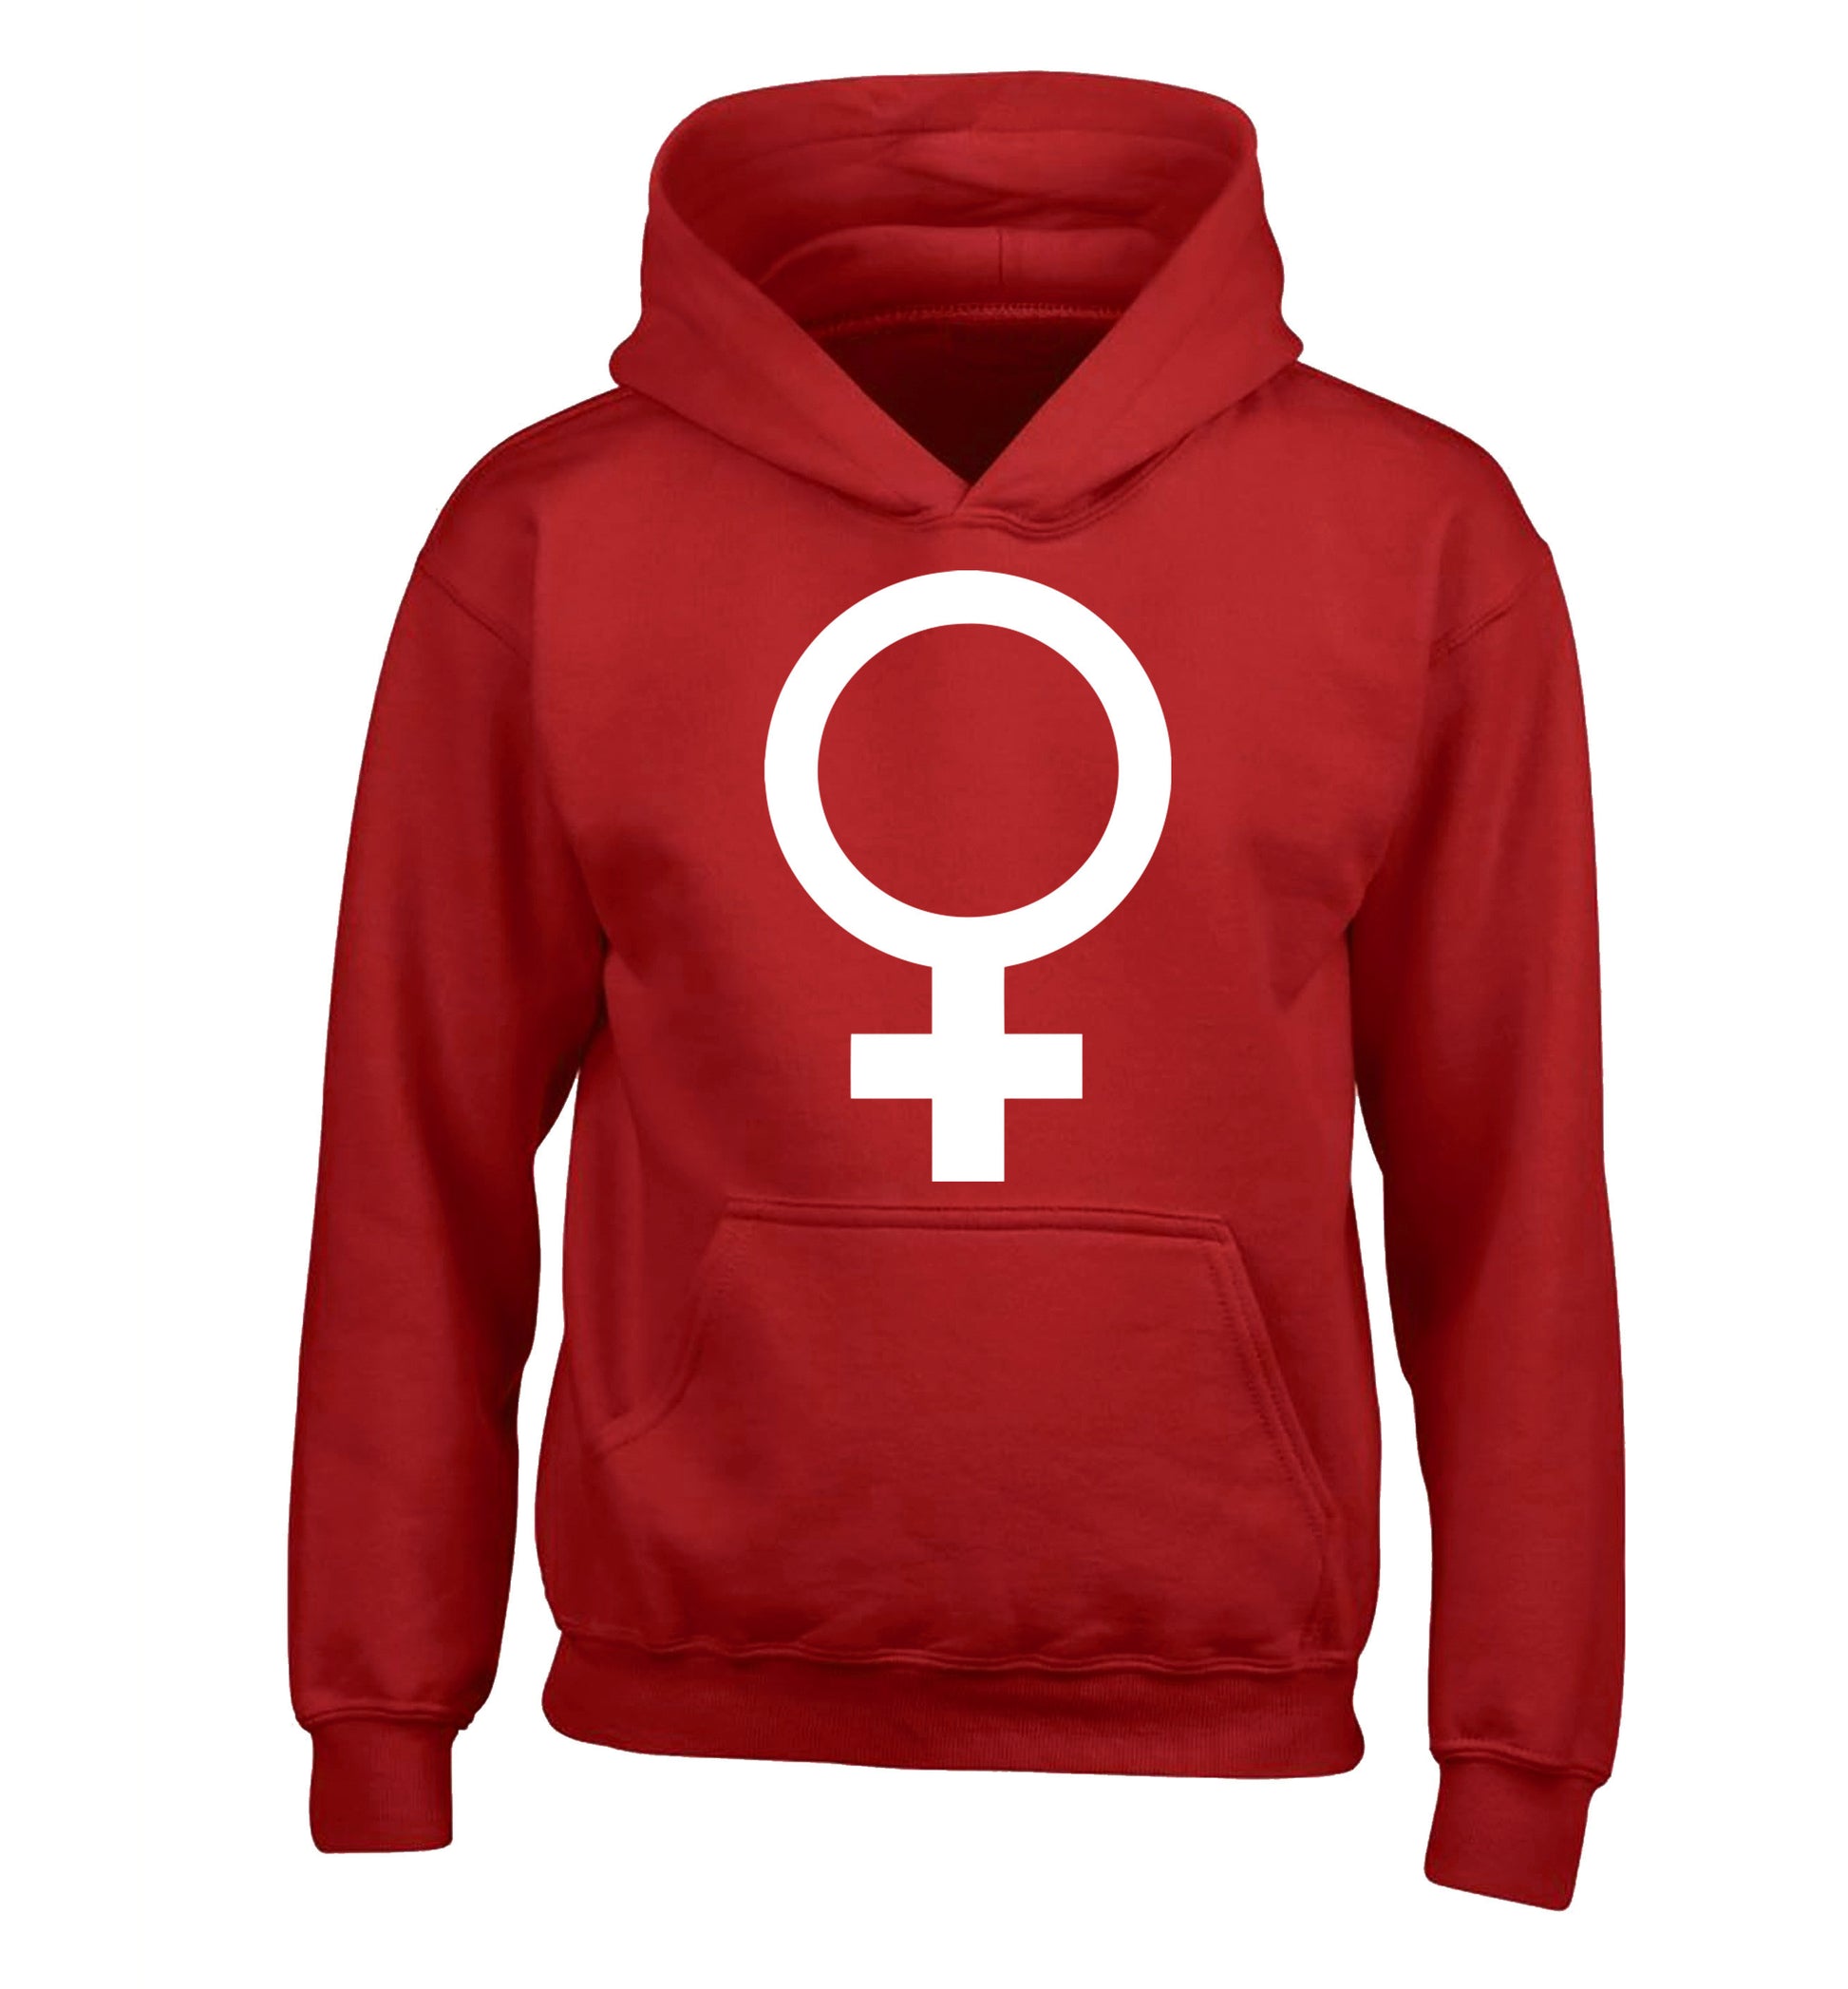 Female symbol large children's red hoodie 12-14 Years